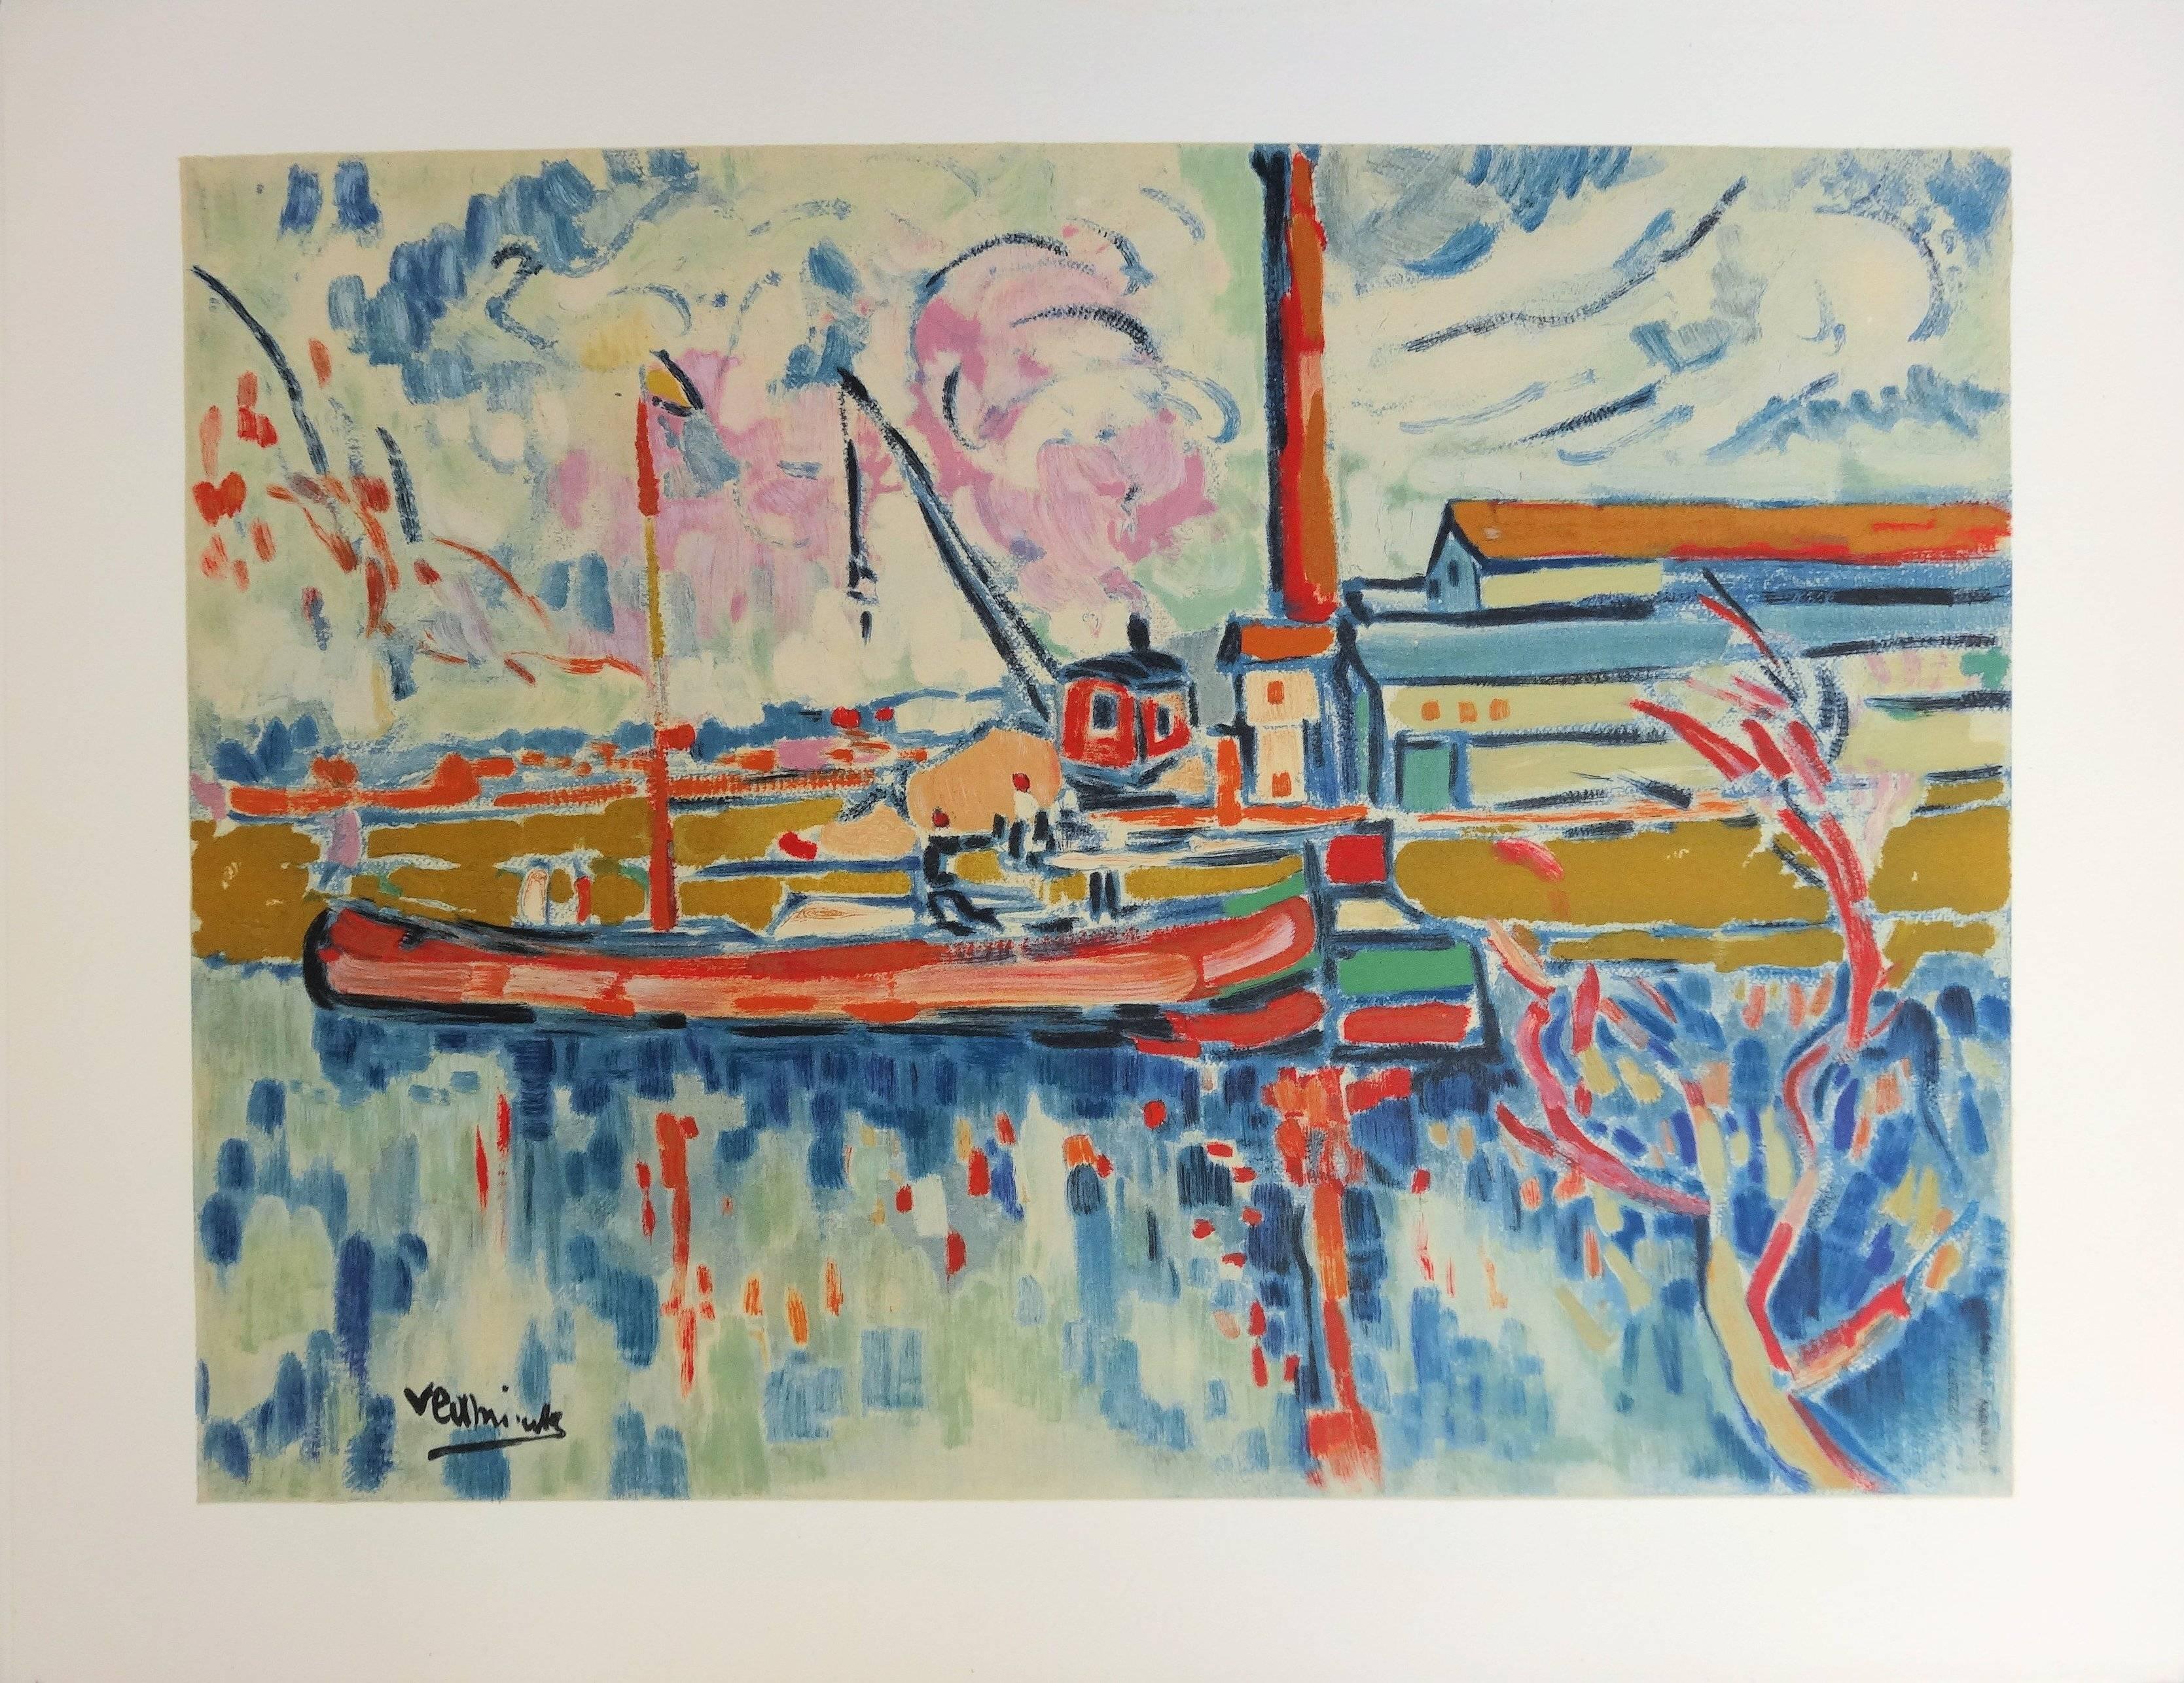 (after) Maurice de Vlaminck Landscape Print – Seine Fluss und Boot in Chatou - Lithographie, 1972